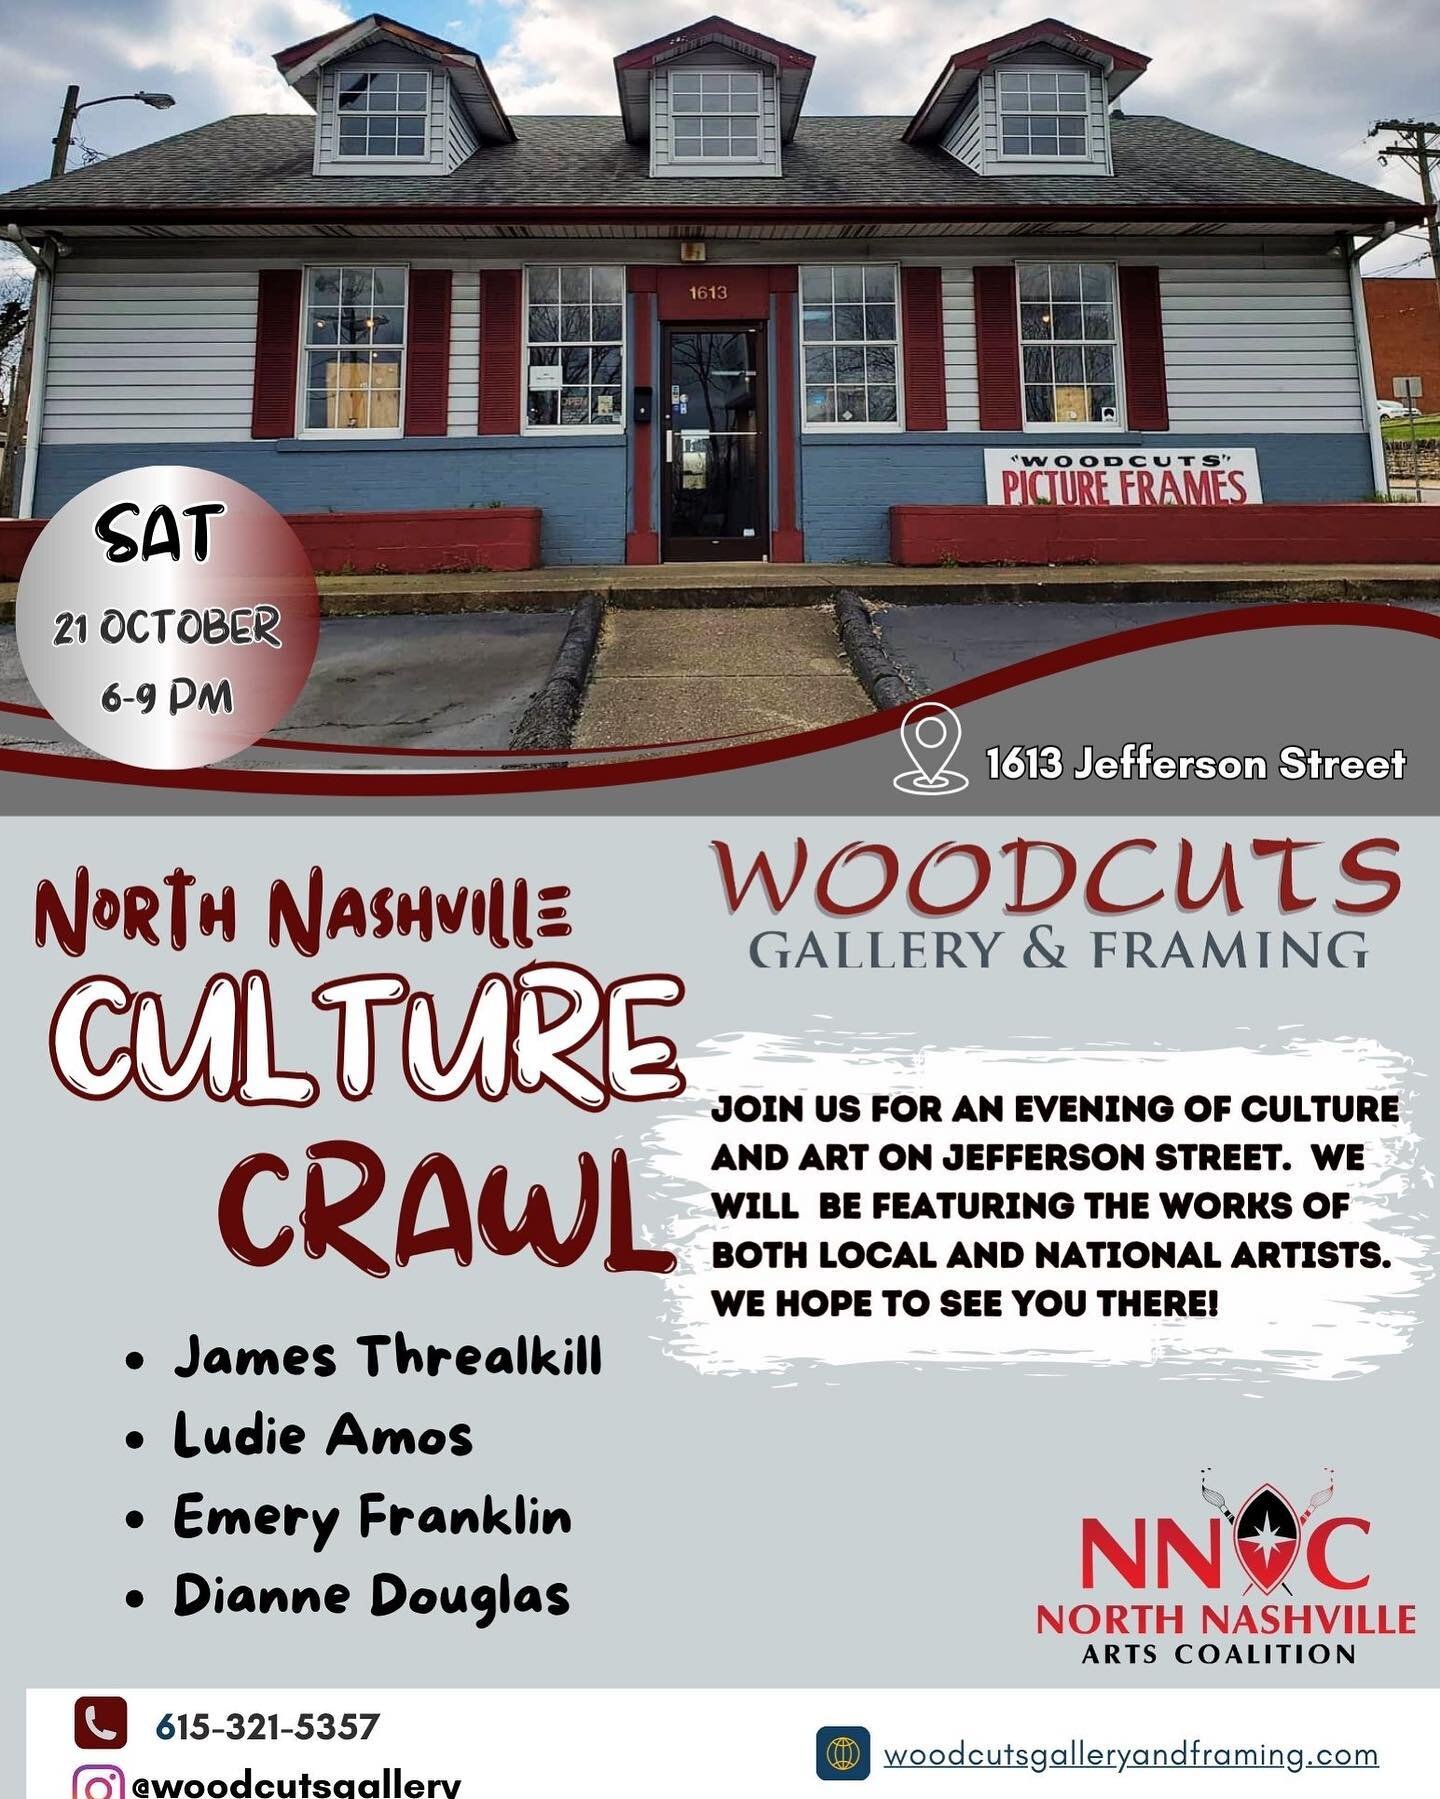 Please join us this Saturday for the North Nashville Culture Crawl! 
@jamesthrealkillart @artist_emery_franklin @diannevaldoug 
#woodcutsgallery #northnashville #culturecrawl